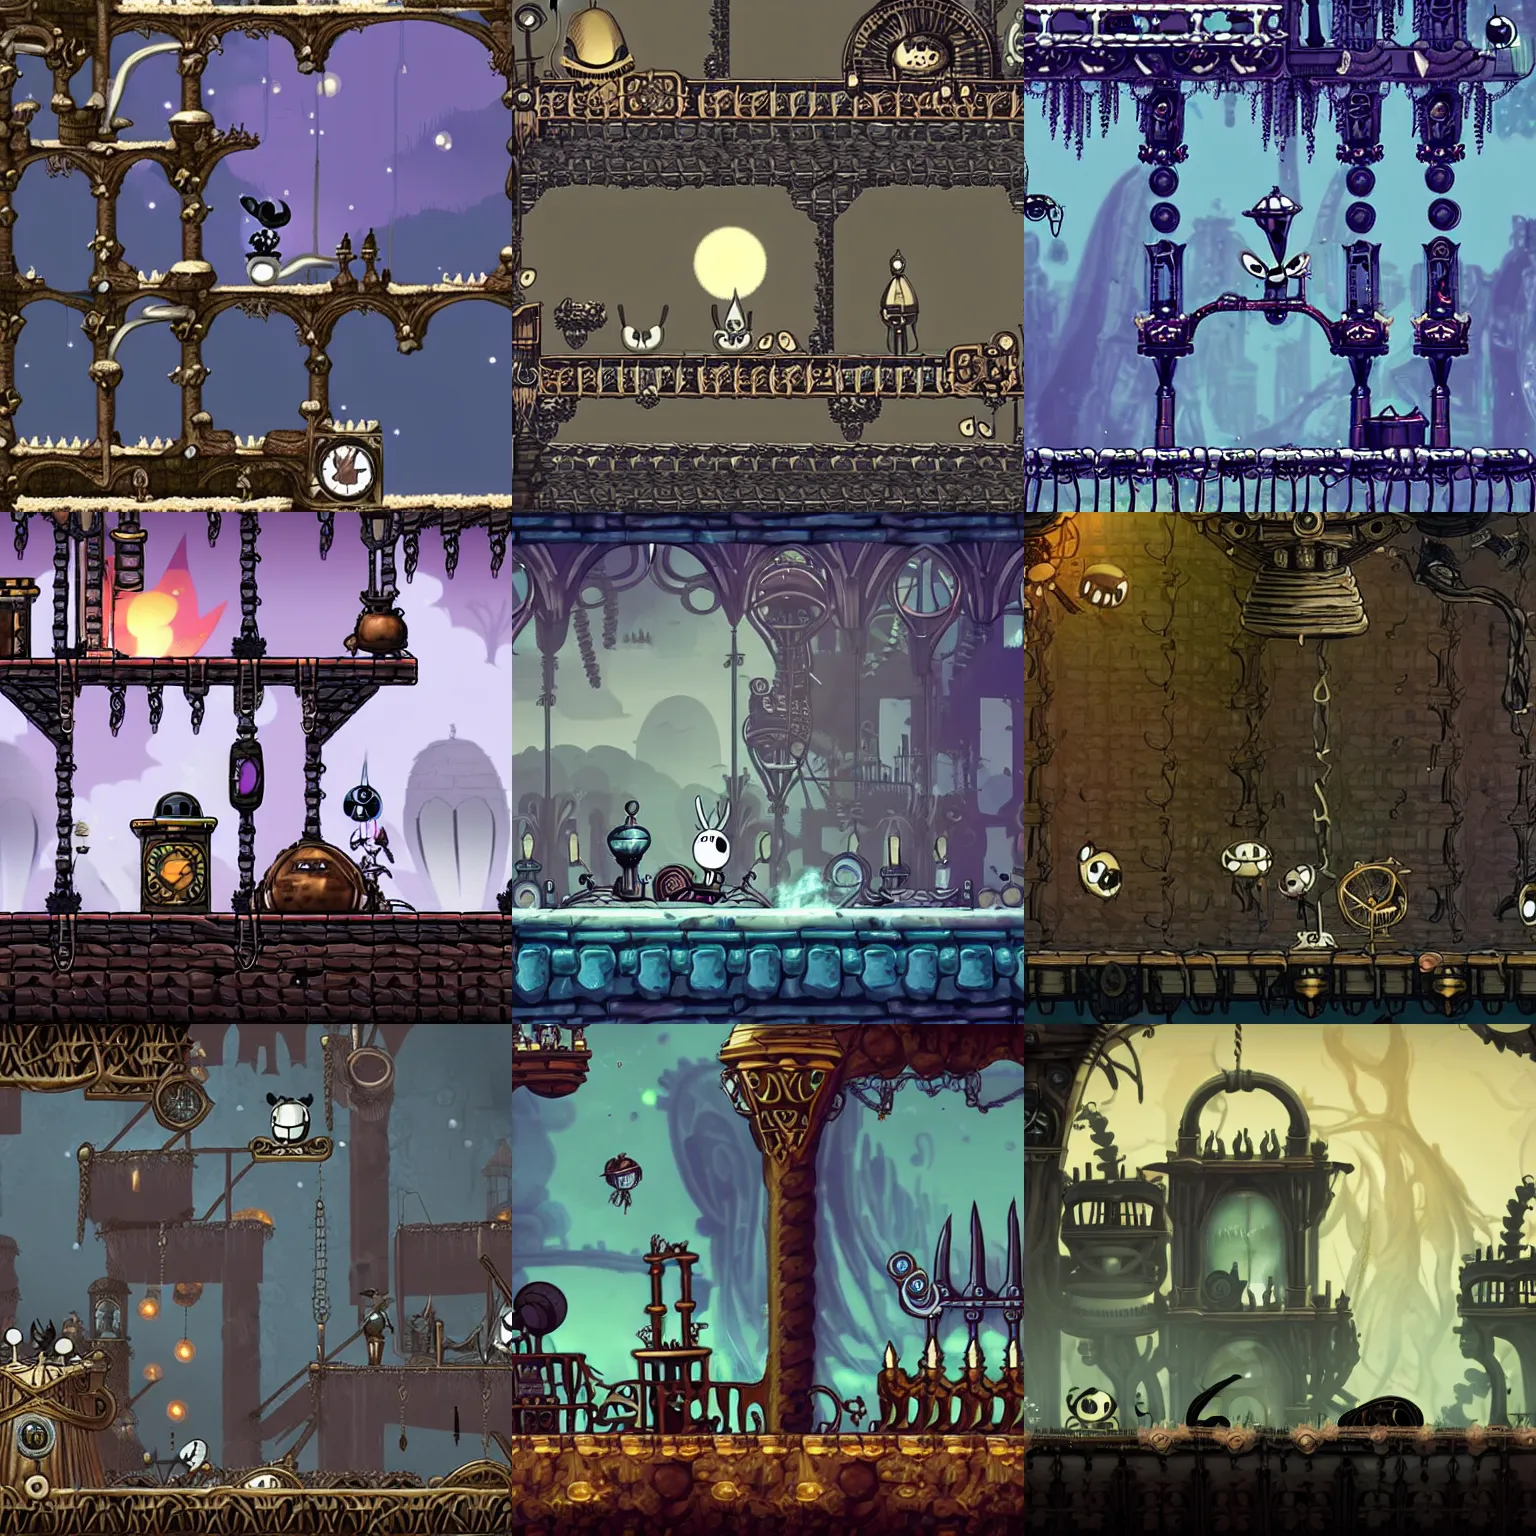 Prompt: Hollow Knight screenshot, steampunk environment